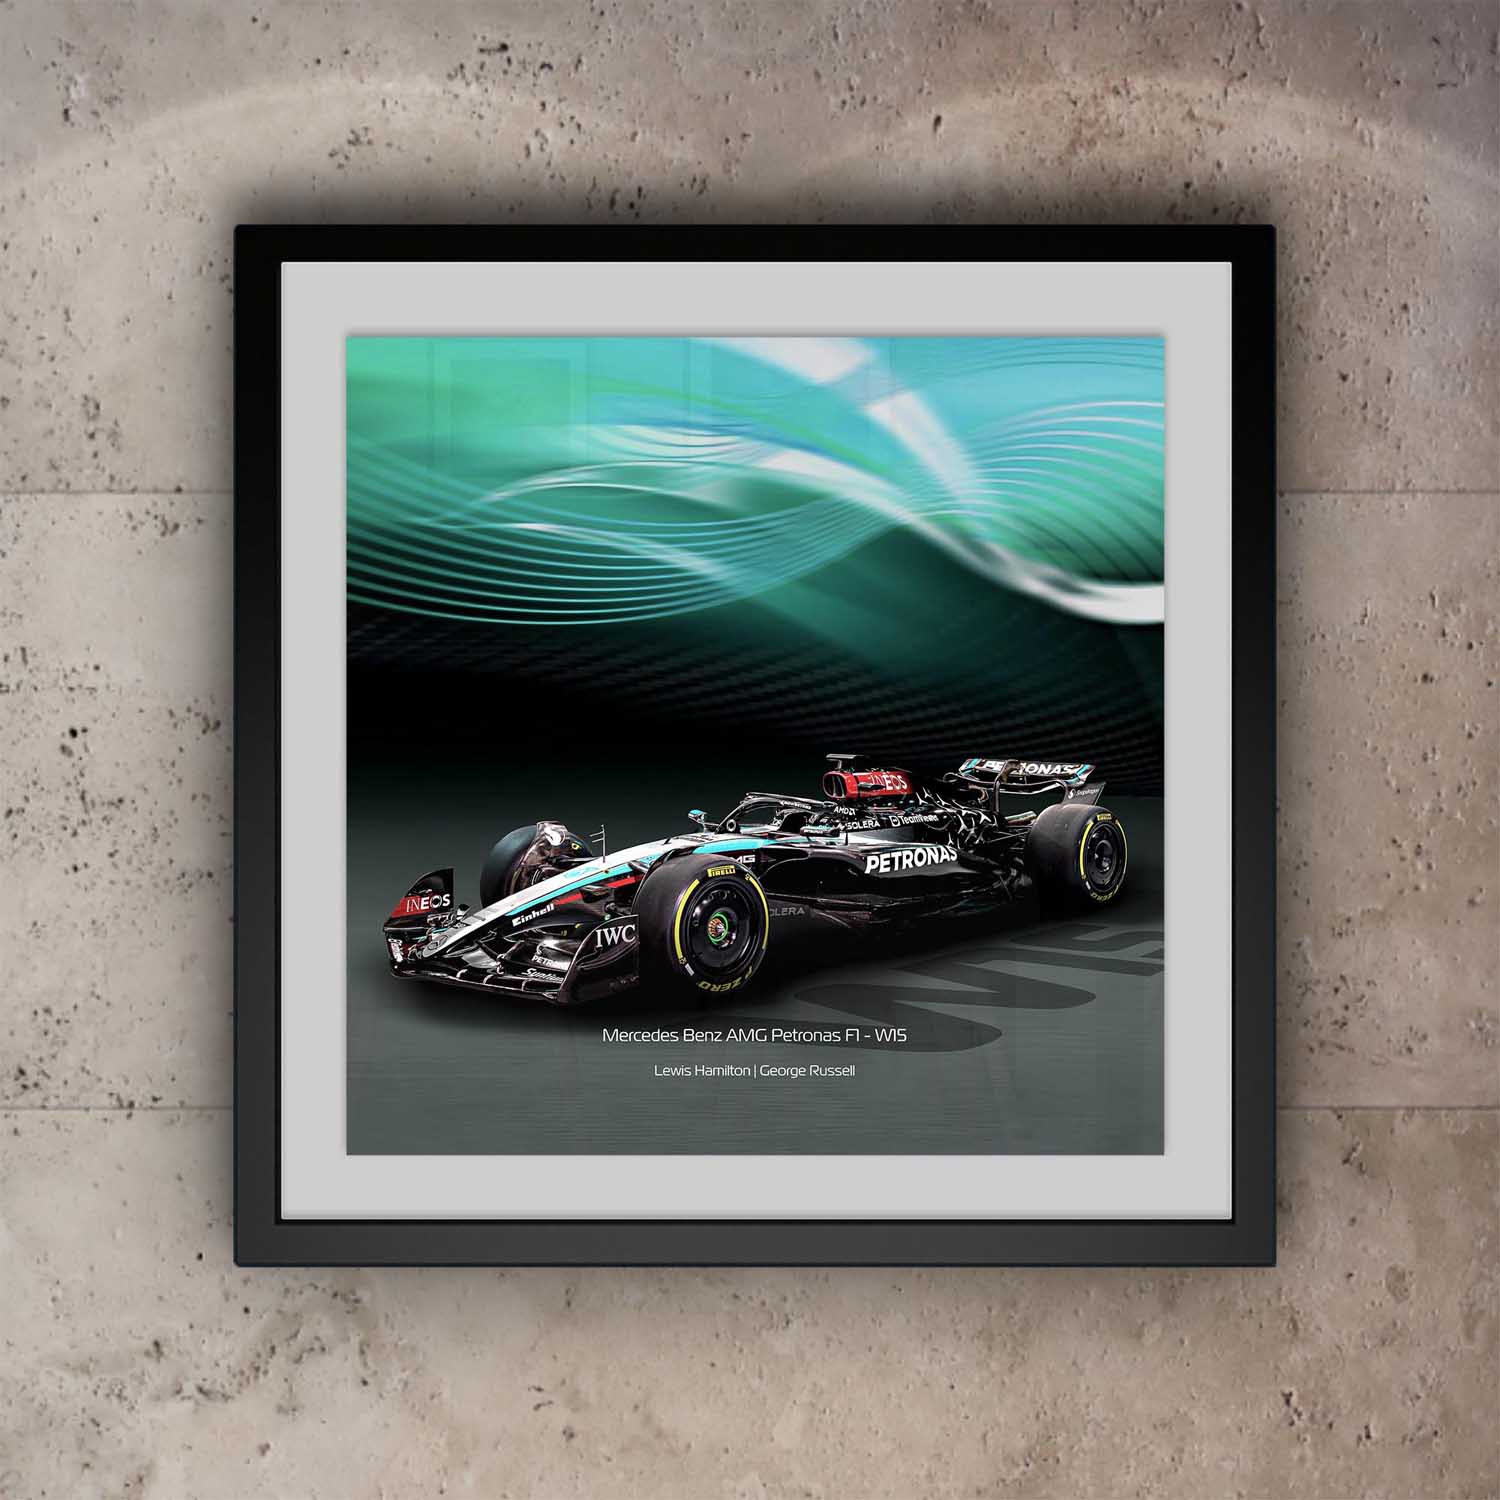 Mercedes F1 W15 Car Print